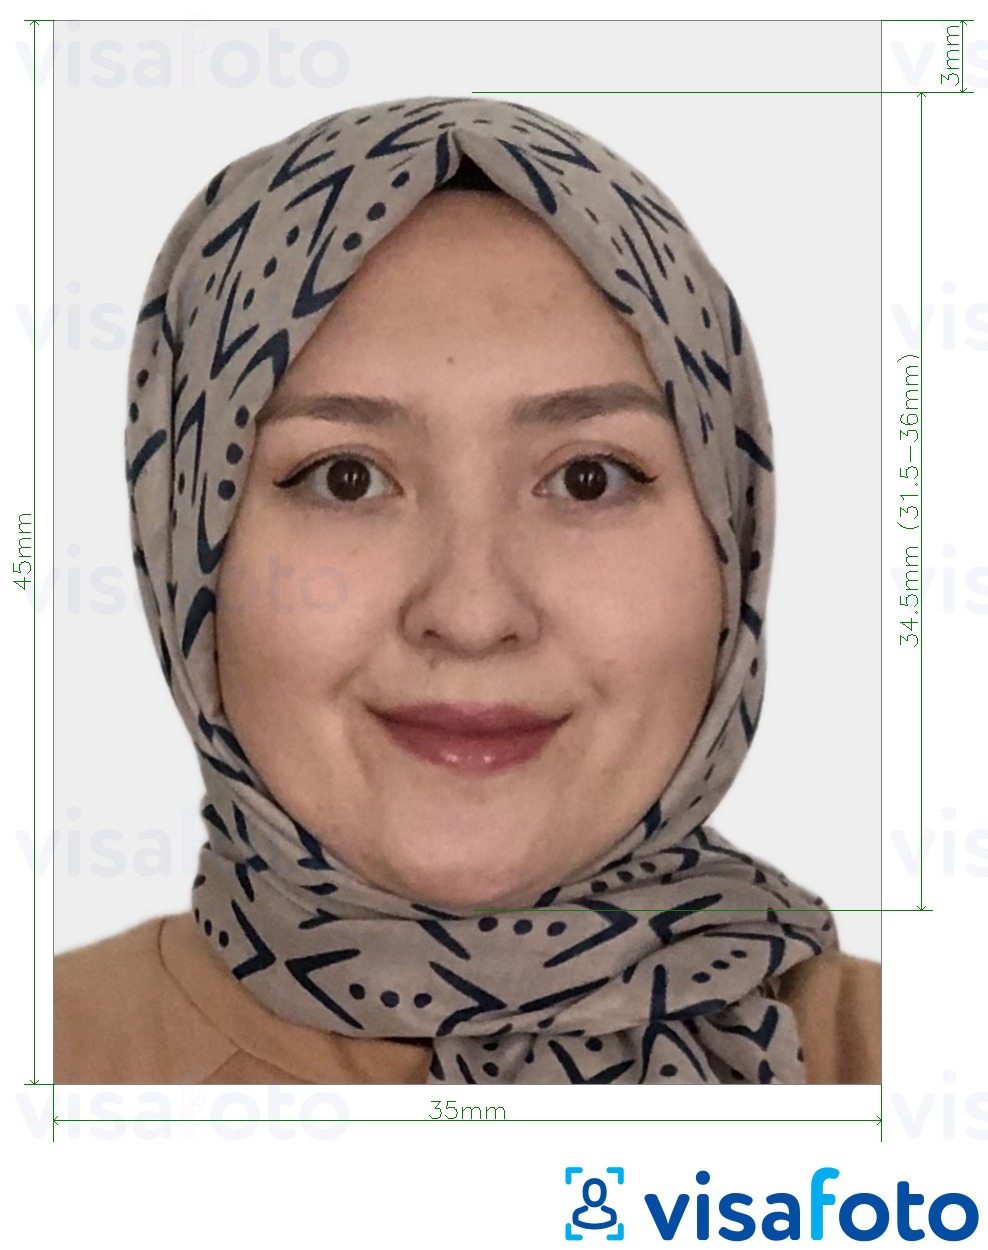 Shembulli i fotos per Kazakistan Visa 35x45 mm (3.5x4.5 cm) me specifikimet ekzakte